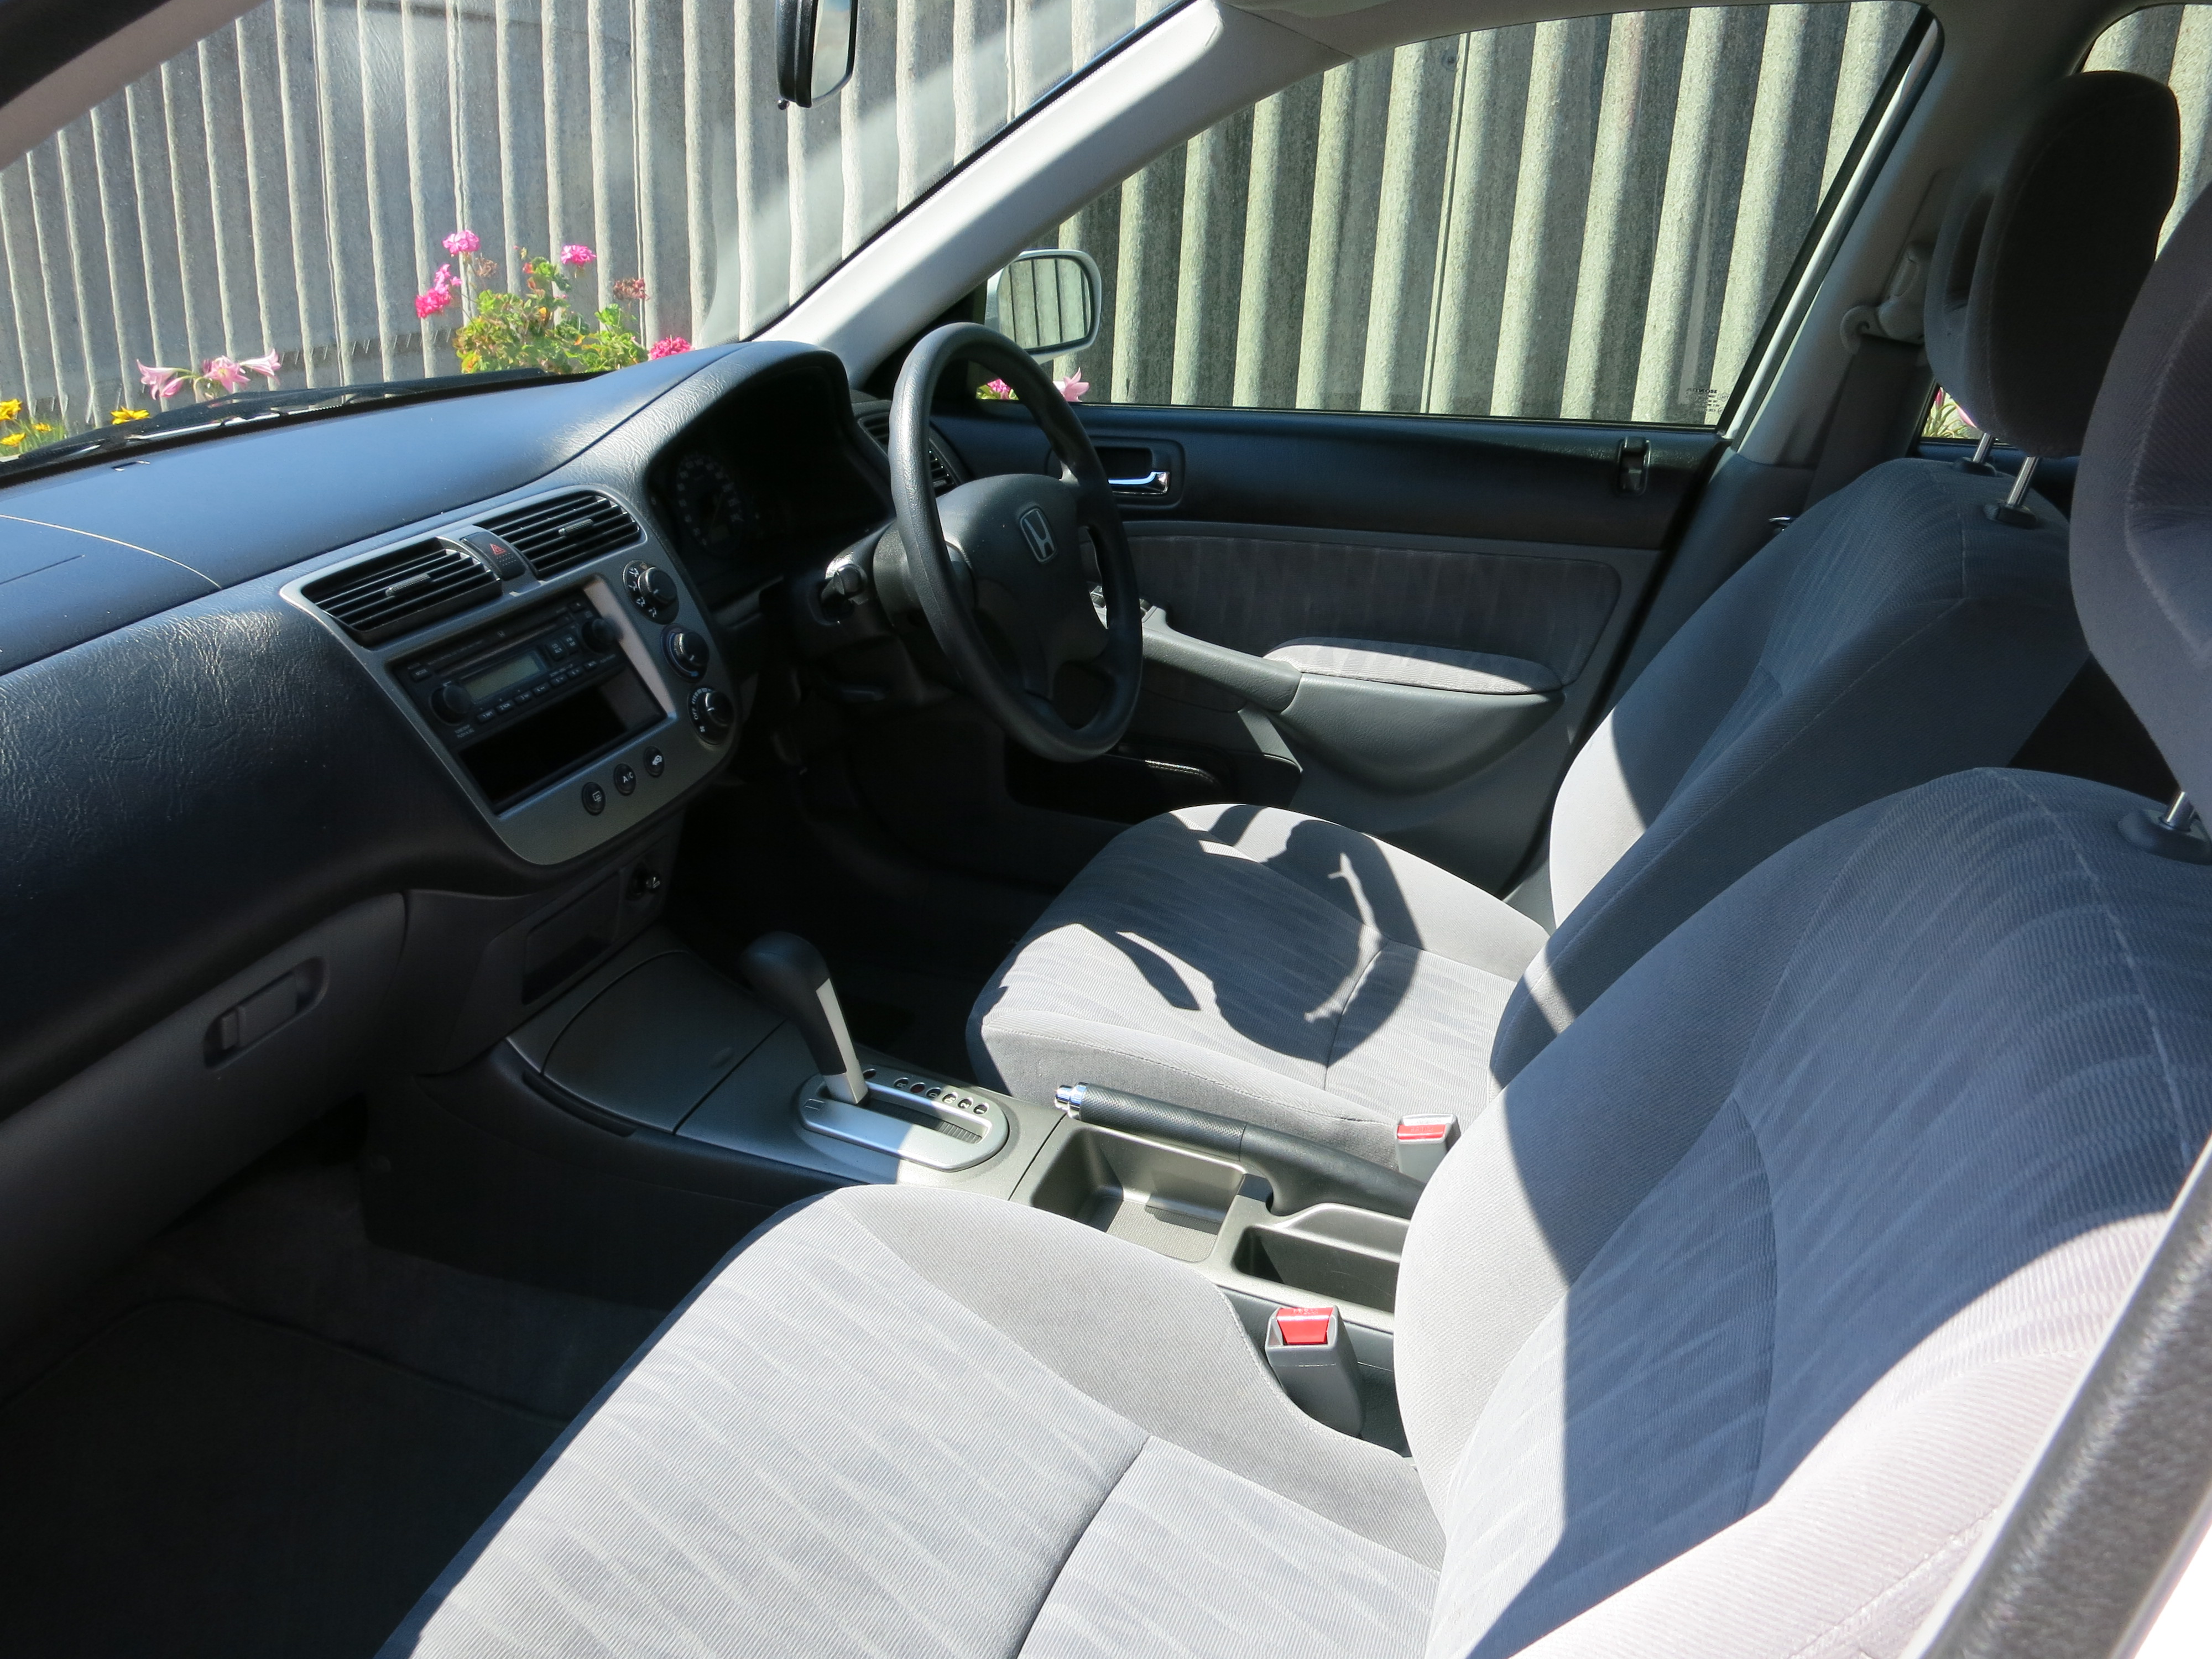 Honda Civic Interior Interior Cabin